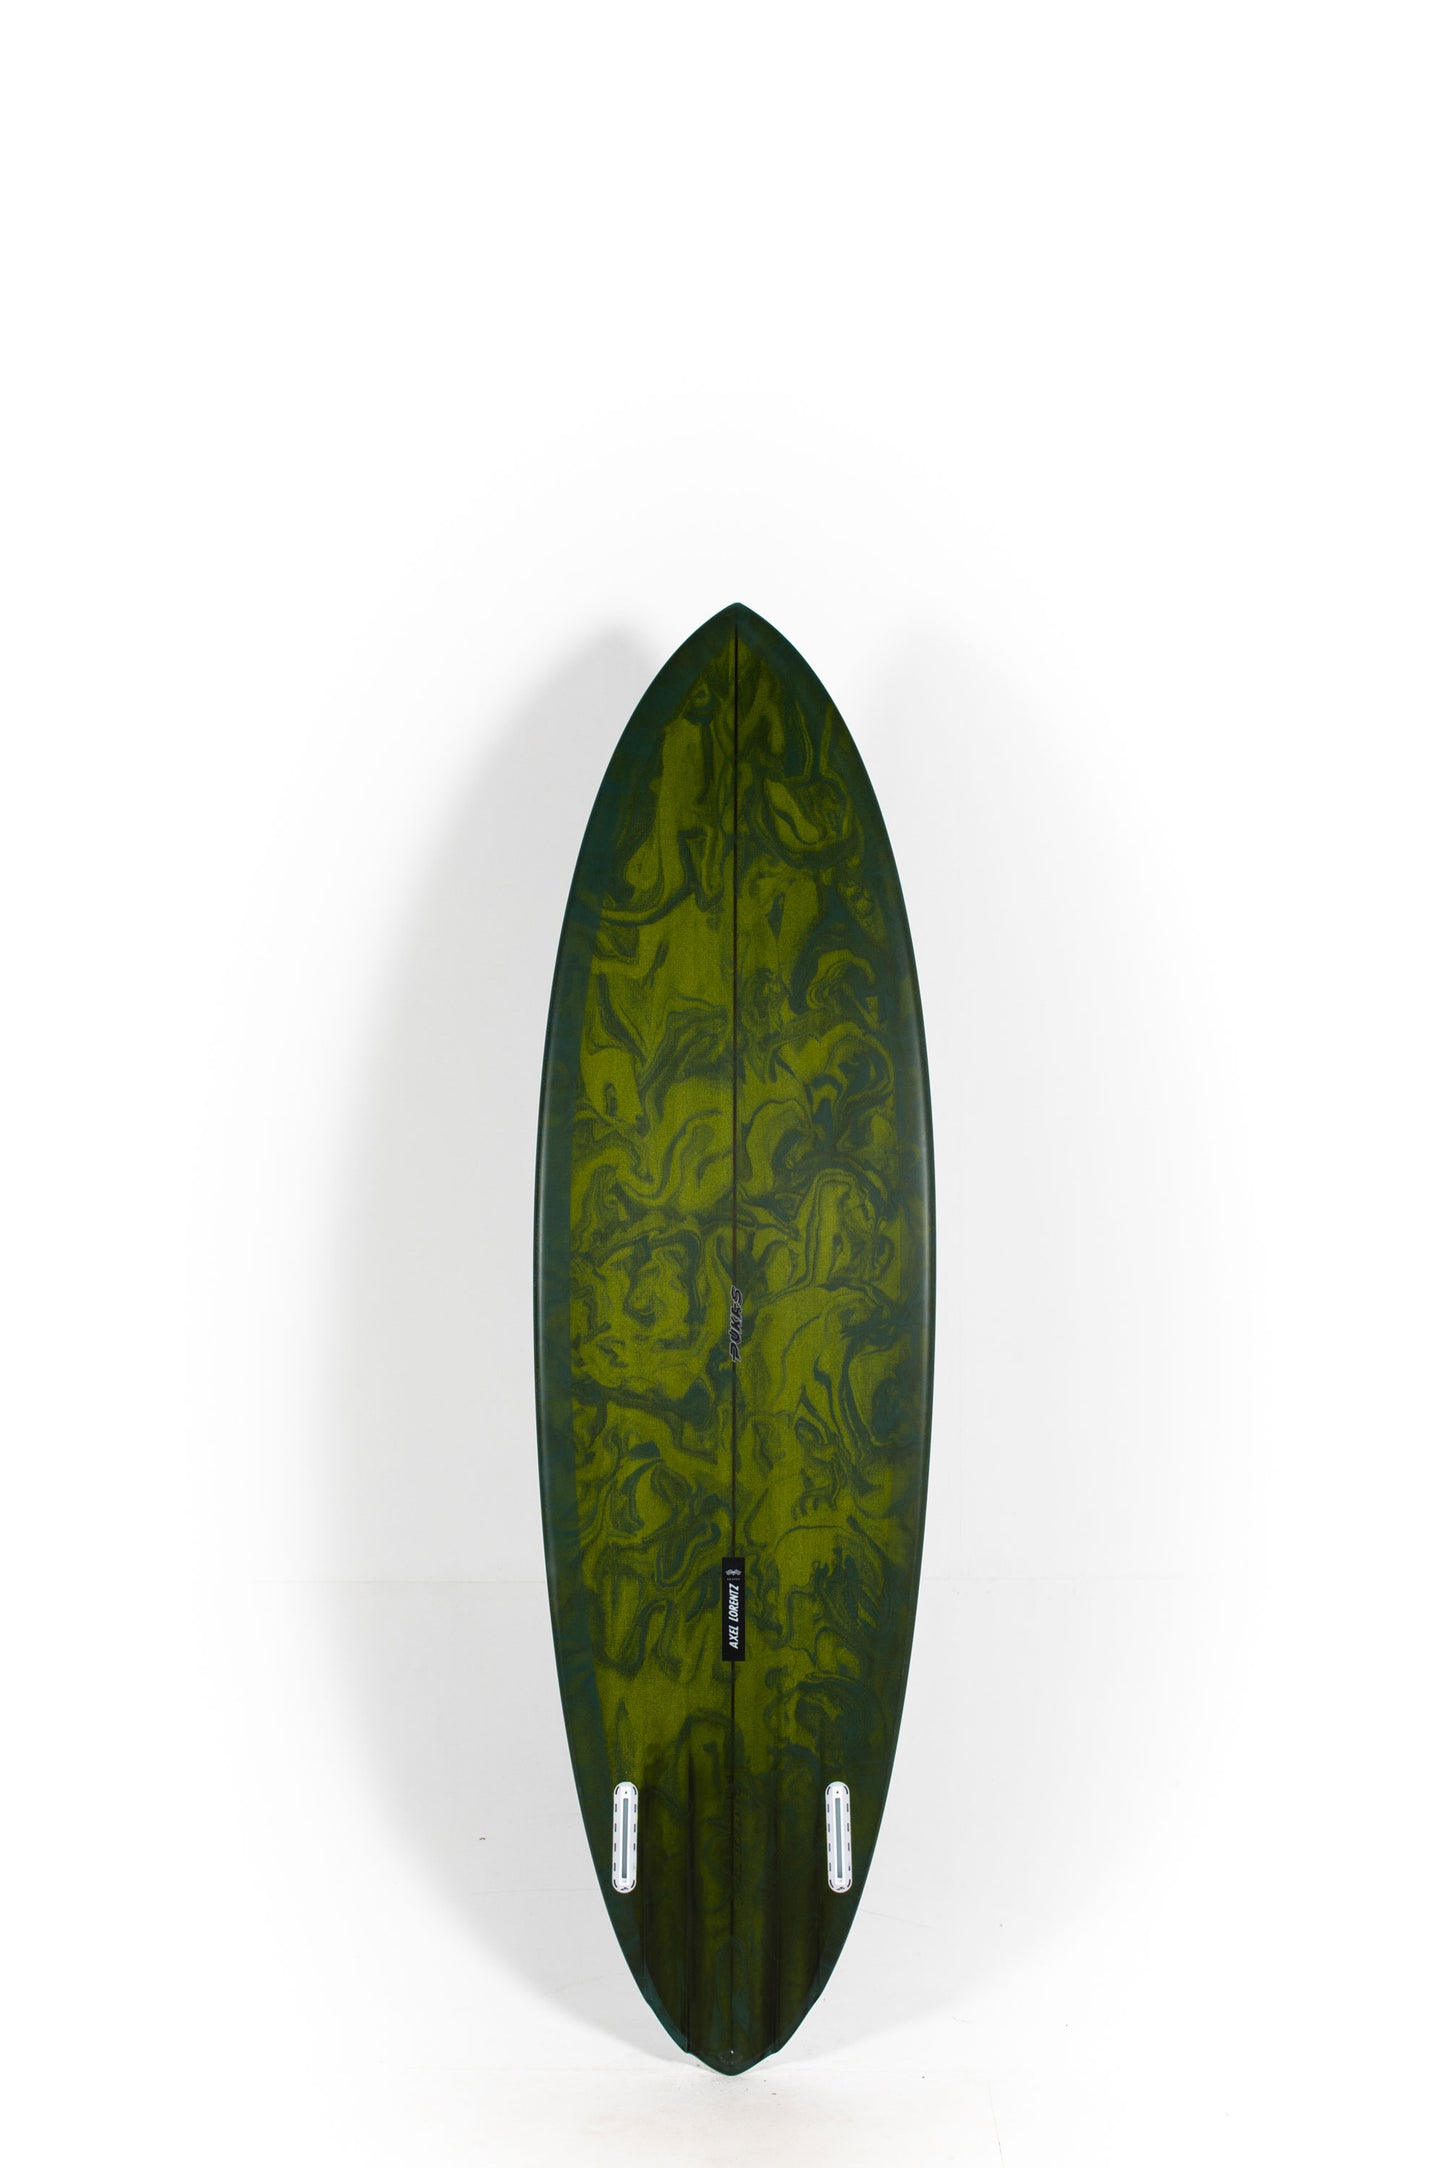 Pukas Surf Shop - Pukas Surfboard - LADY TWIN by Axel Lorentz - 6’6” x 20,98 x 2,85 - 40,57L - AX09163